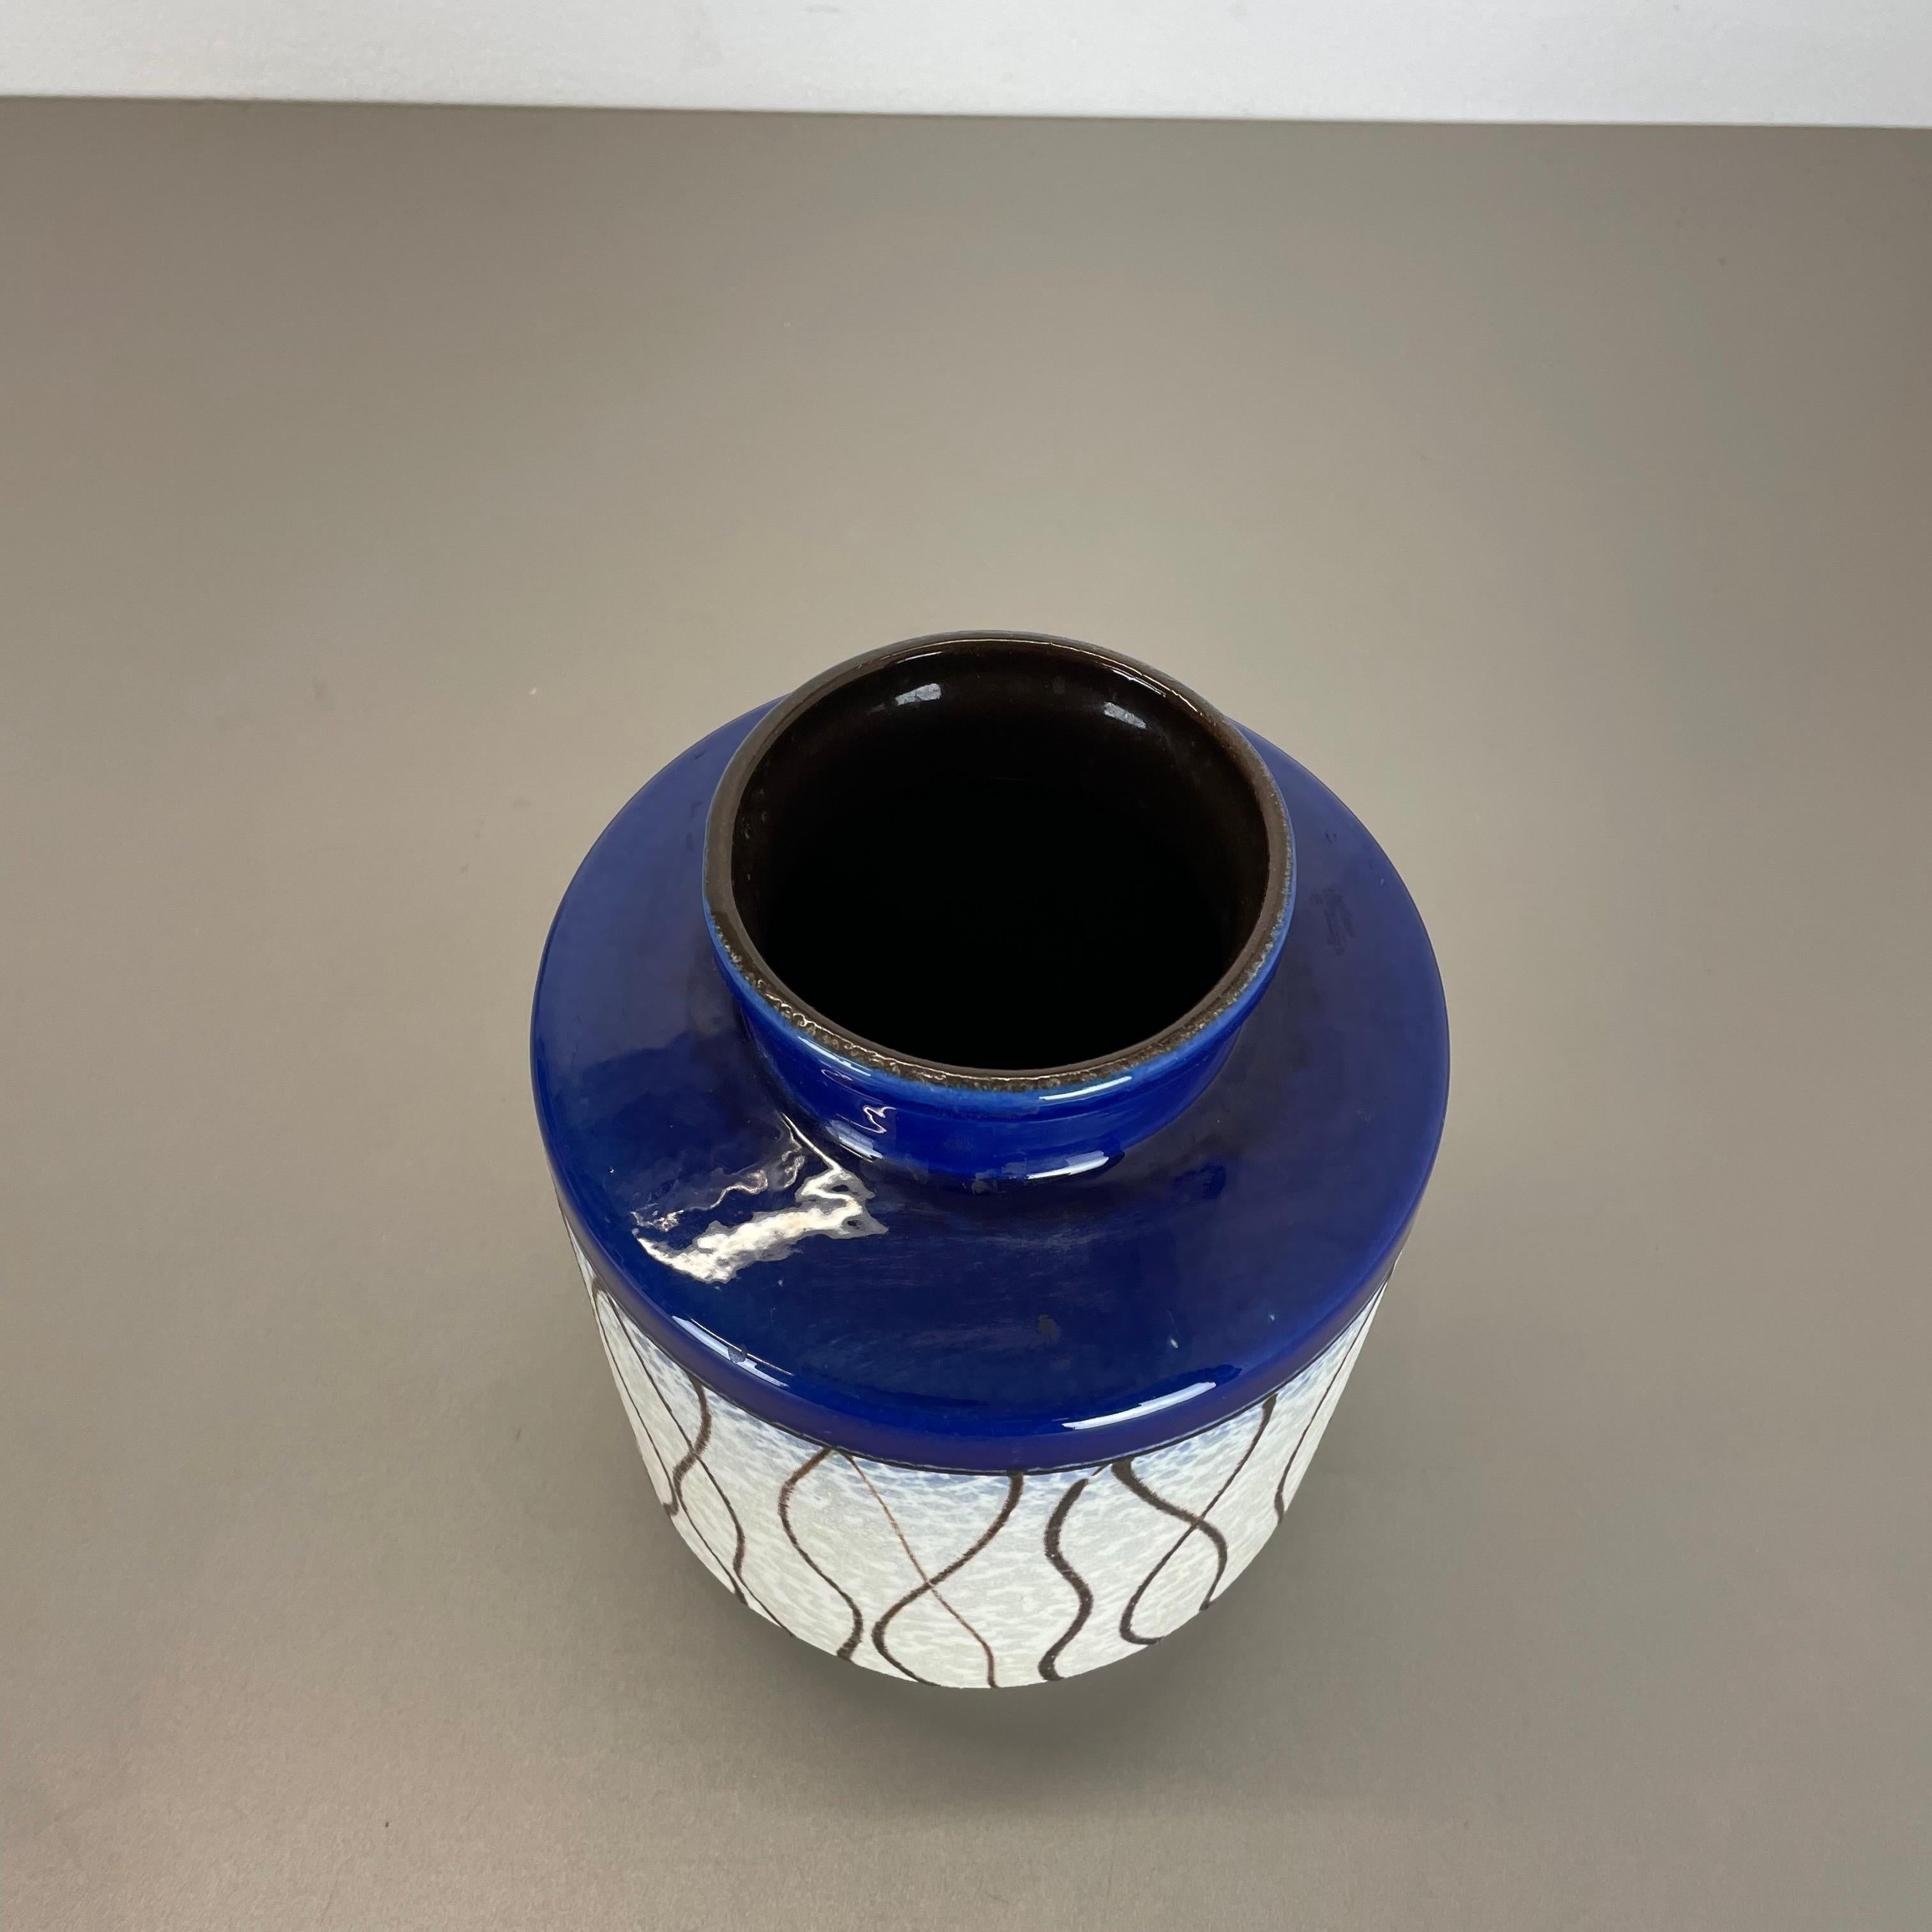 Fat Lava Ceramic Pottery Vase Heinz Siery Carstens Tönnieshof, Germany, 1960s For Sale 1